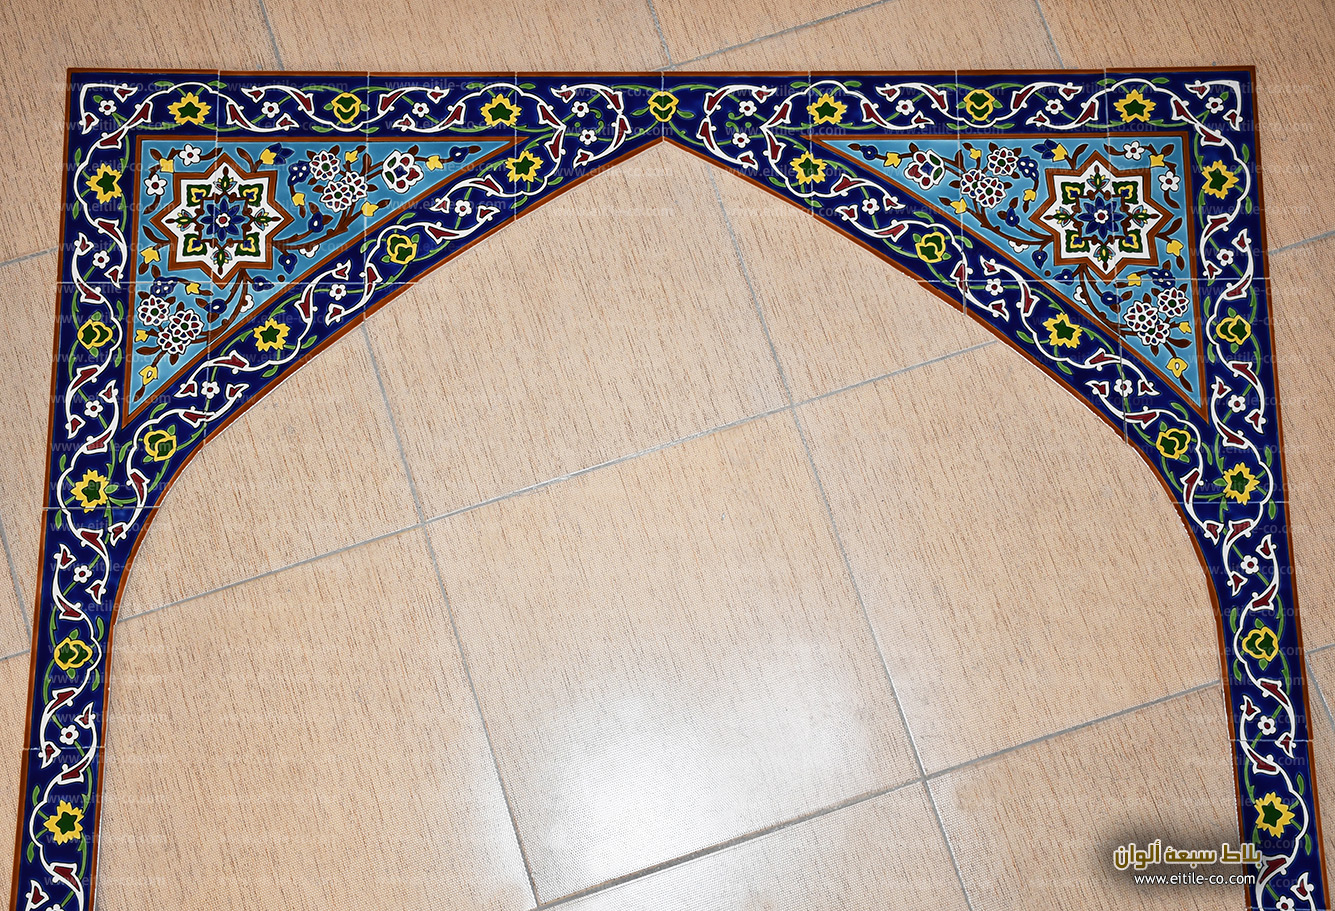 Persian custom made tile supplier, www.eitile-co.com